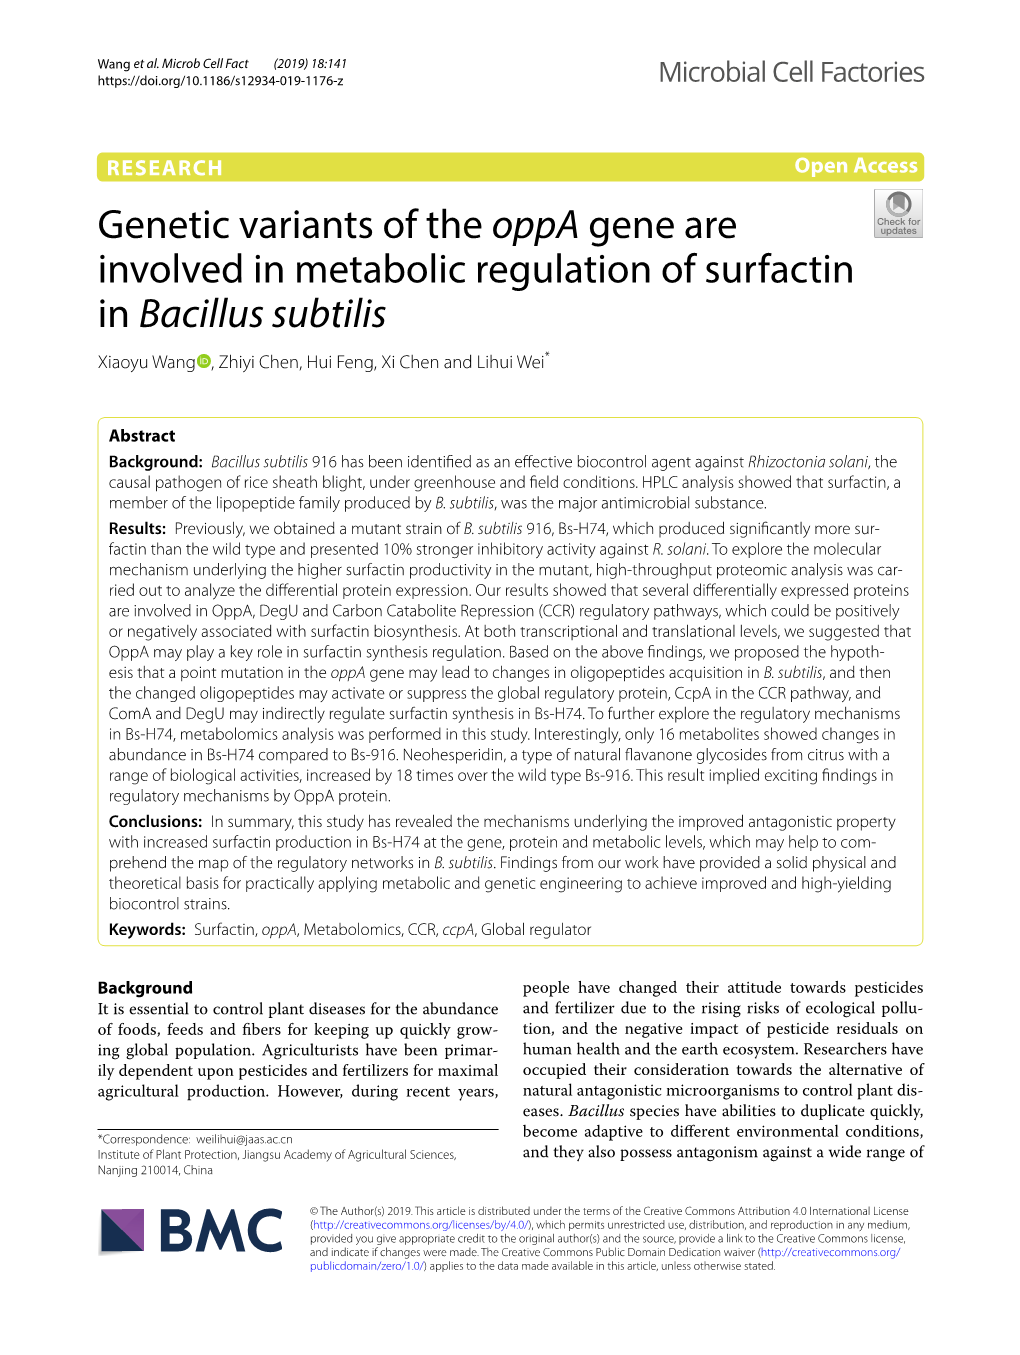 Genetic Variants of the Oppa Gene Are Involved in Metabolic Regulation of Surfactin in Bacillus Subtilis Xiaoyu Wang , Zhiyi Chen, Hui Feng, Xi Chen and Lihui Wei*